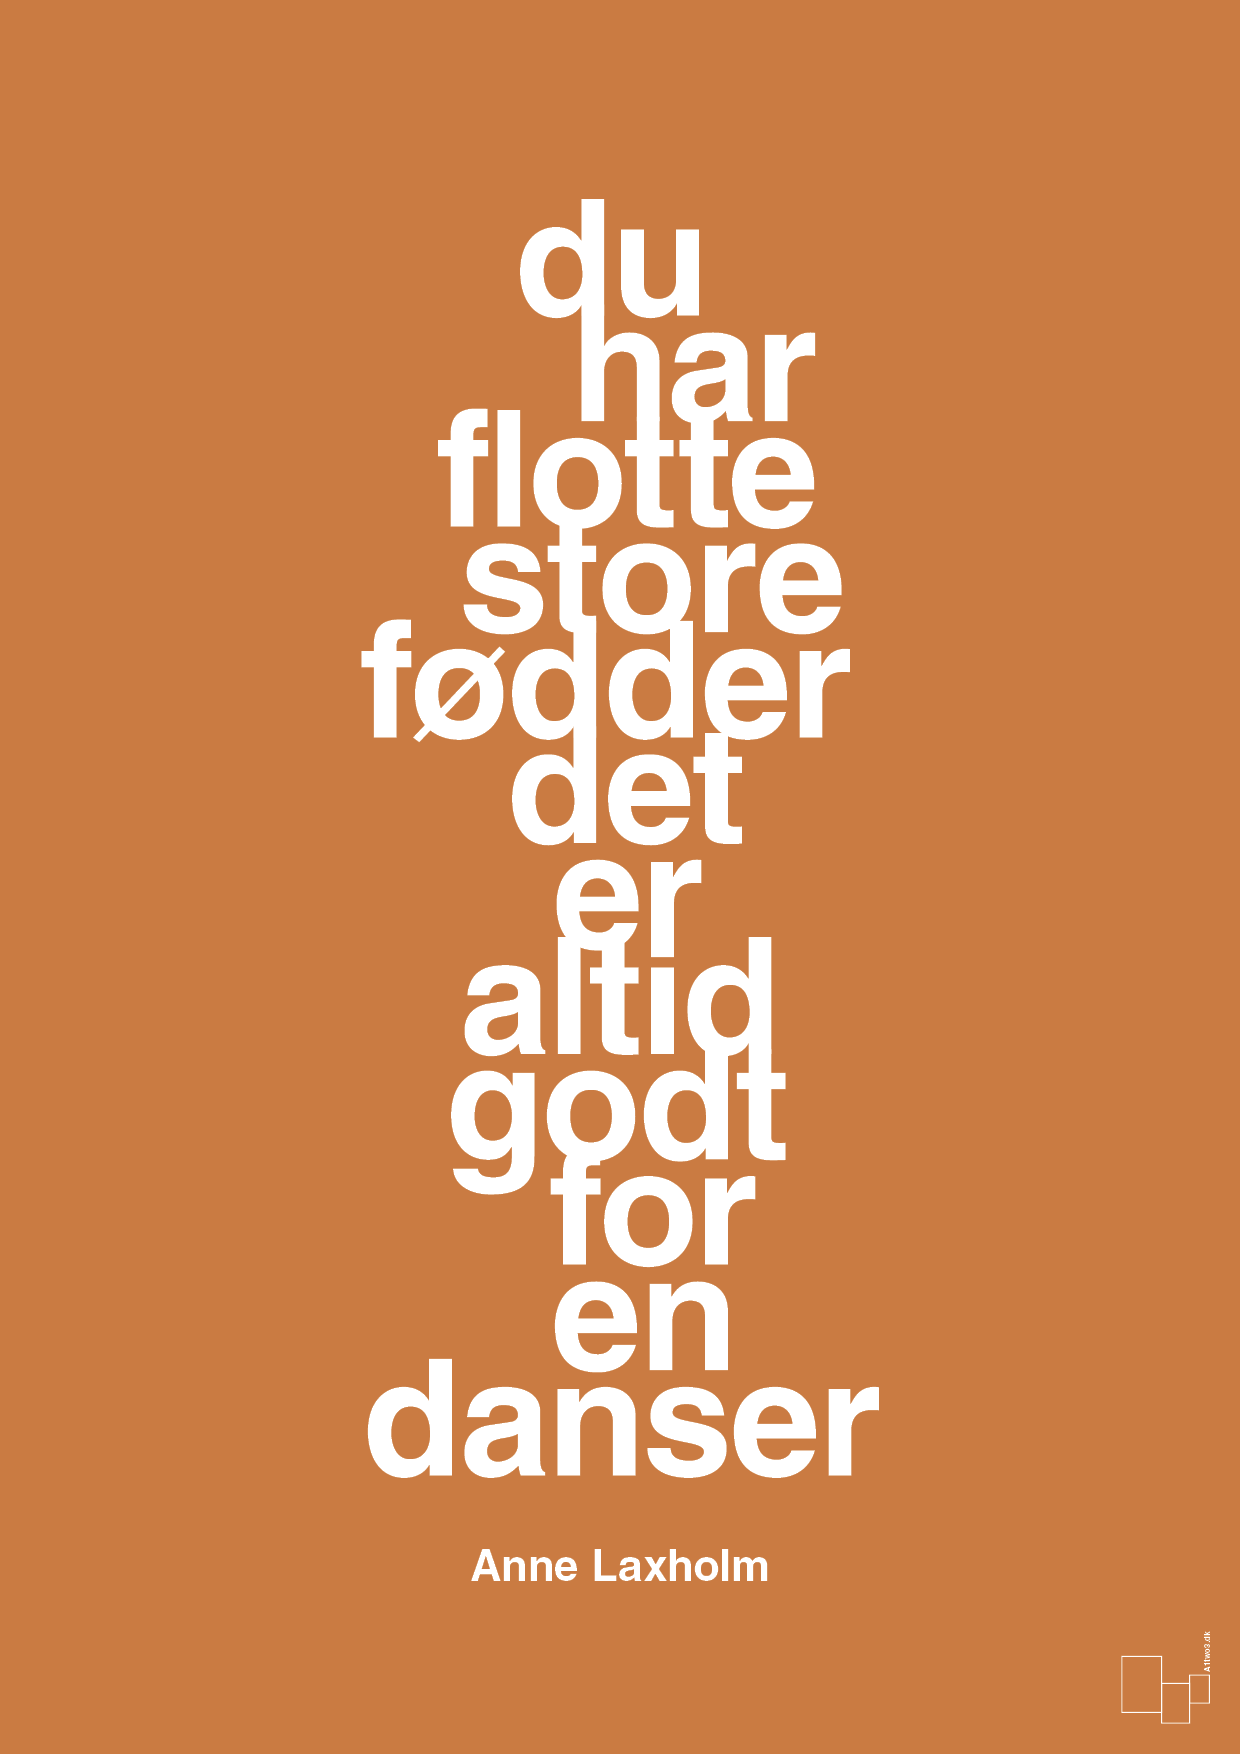 du har flotte store fødder det er altid godt for en danser - Plakat med Citater i Rumba Orange